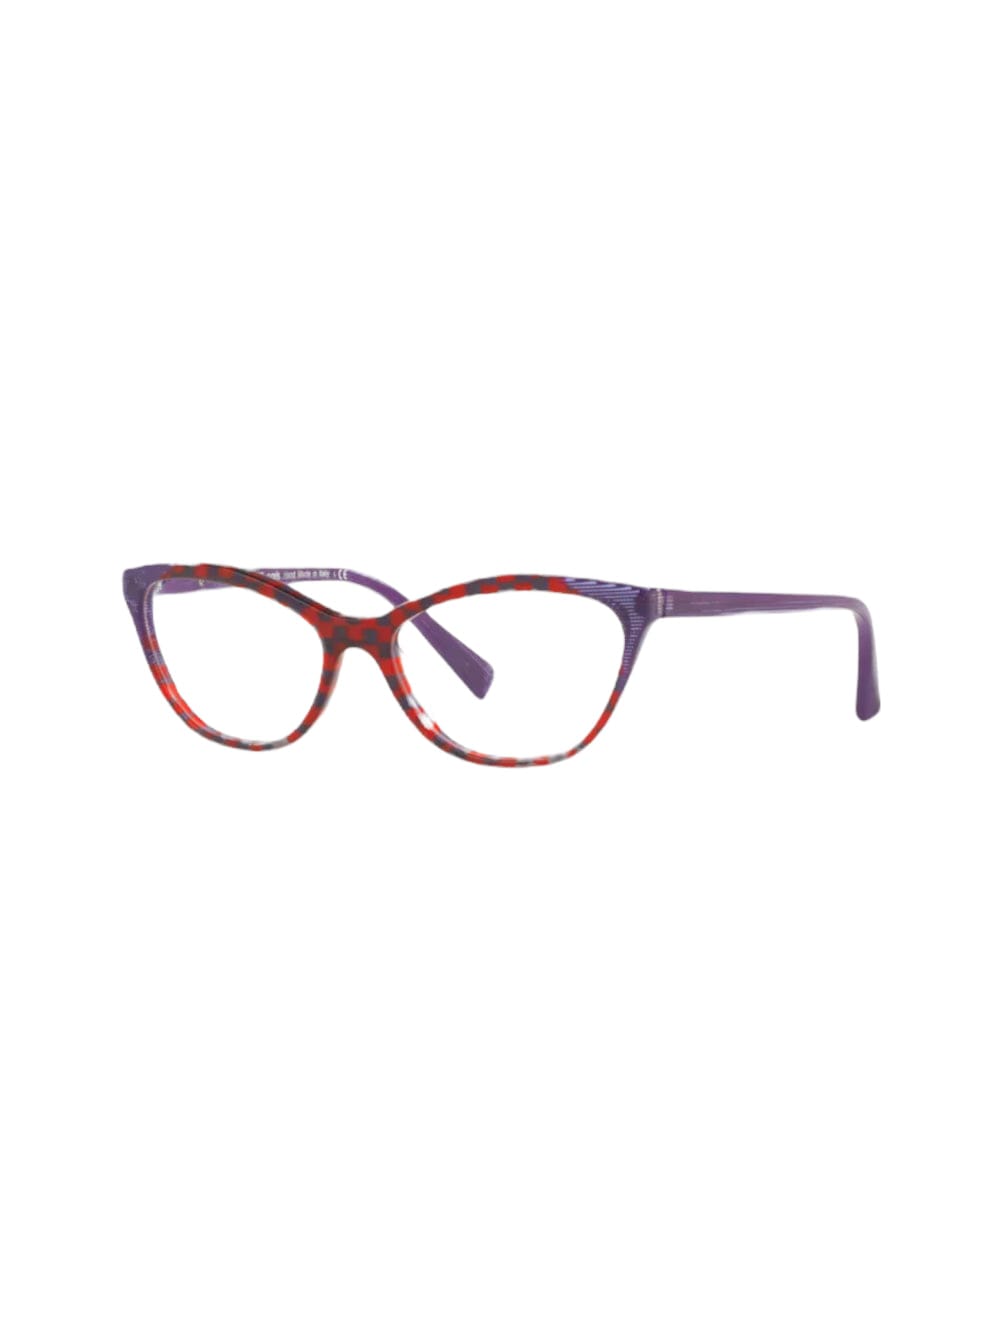 Alain Mikli A03067 - Purple/red/brown Glasses